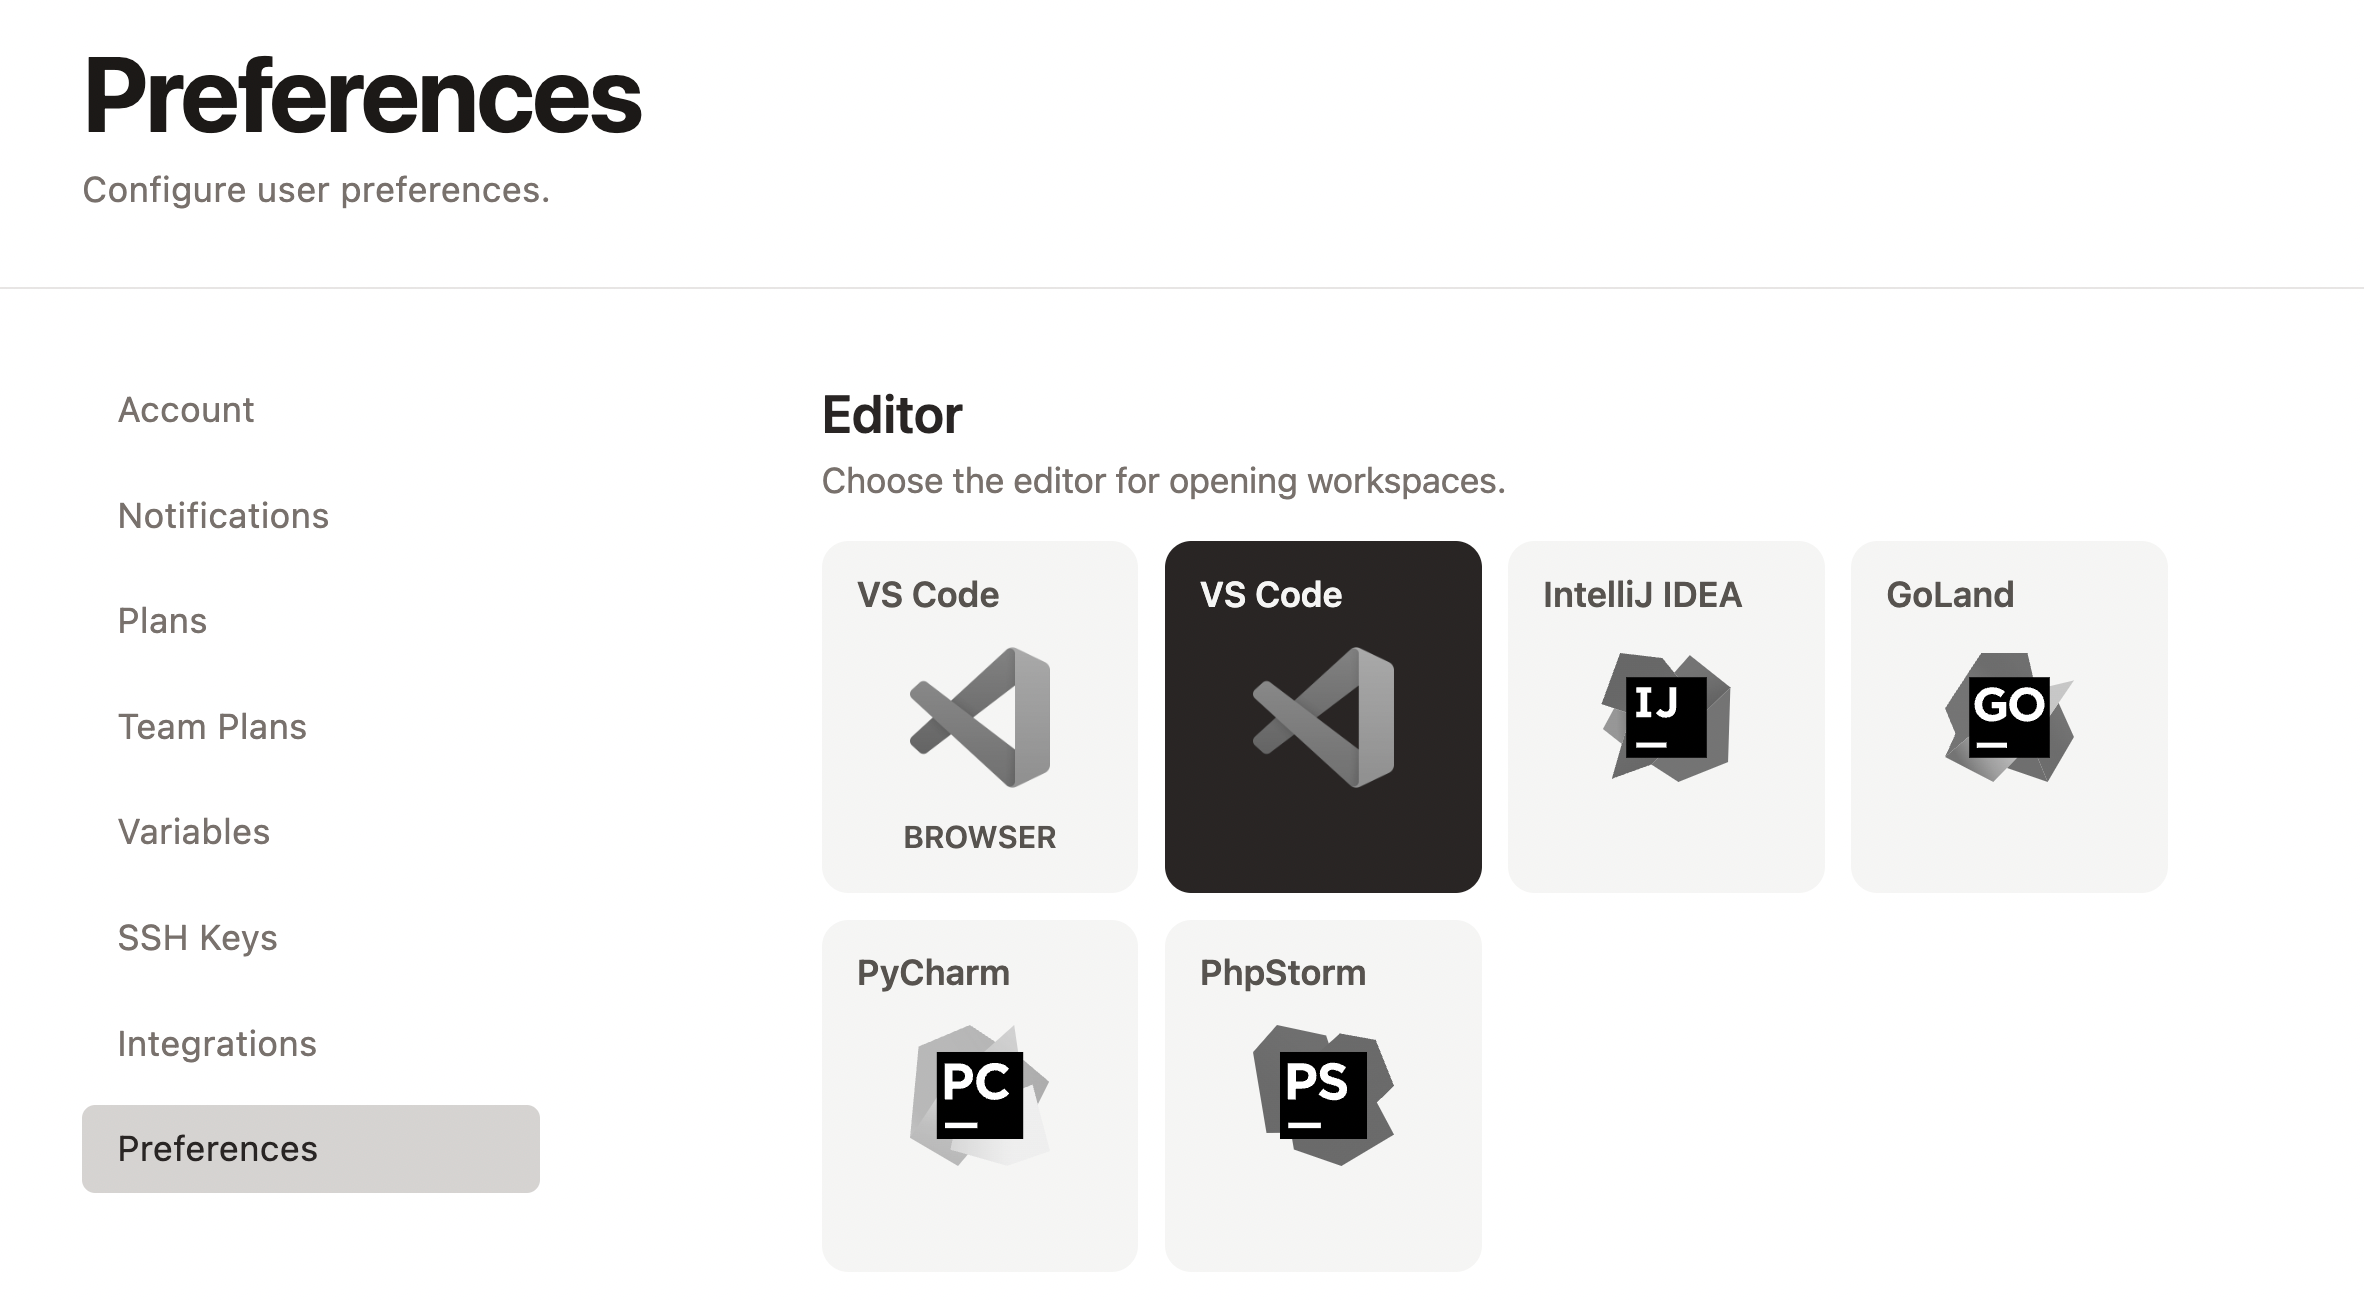 Selecting VS Code Desktop as an editor preference